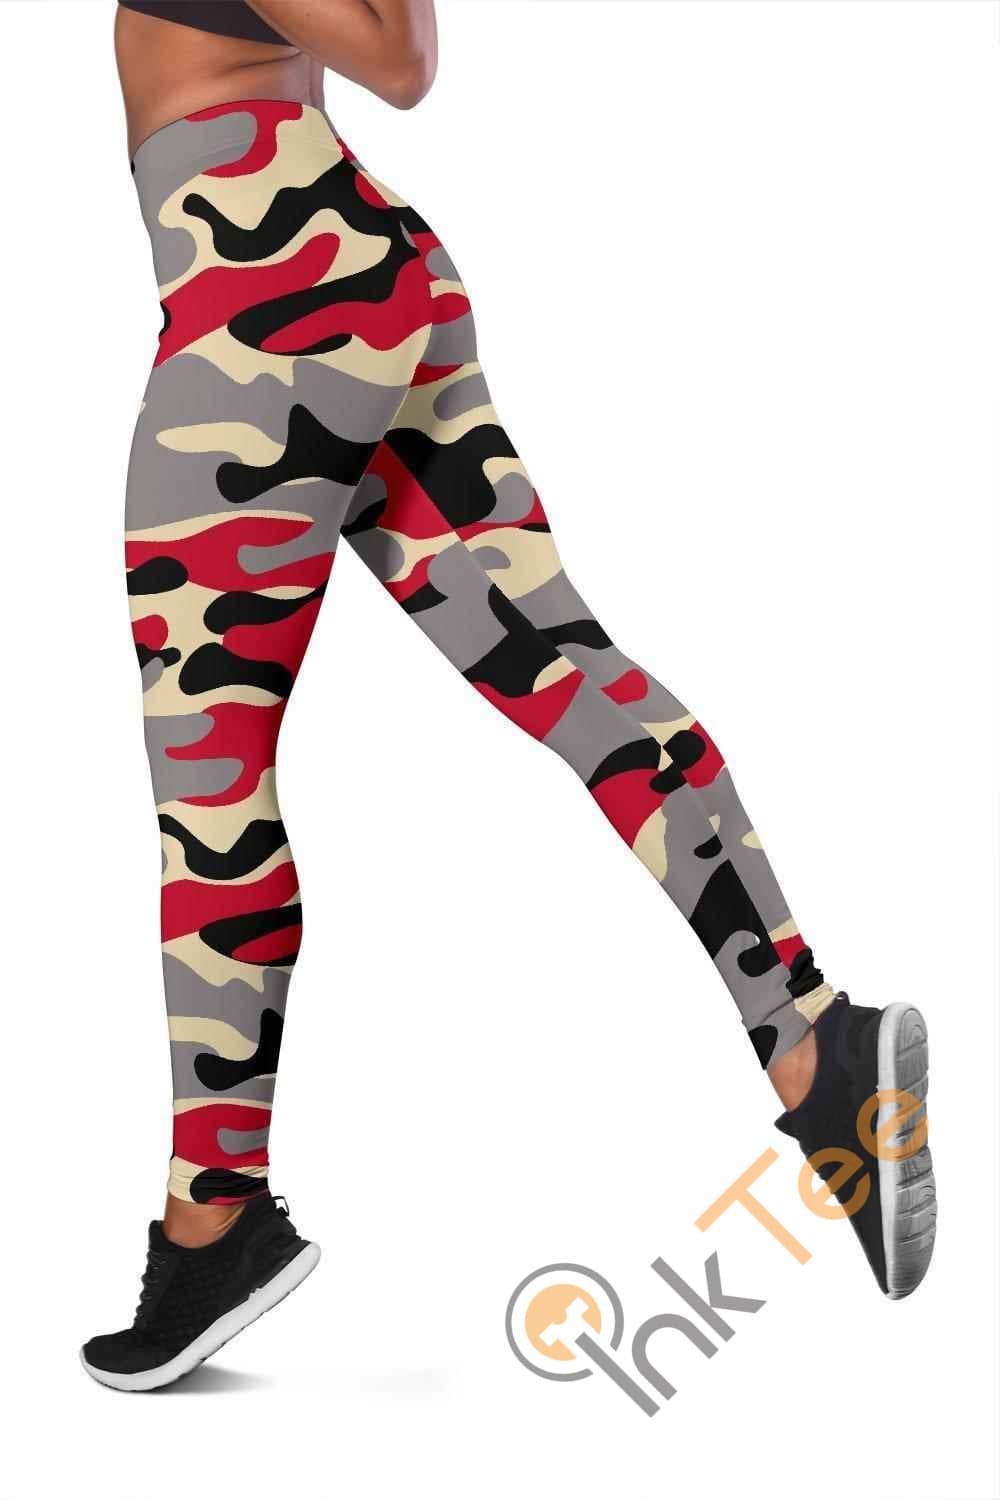 Inktee Store - Arizona Diamondbacks Inspired Tru Camo 3D All Over Print For Yoga Fitness Fashion Women'S Leggings Image